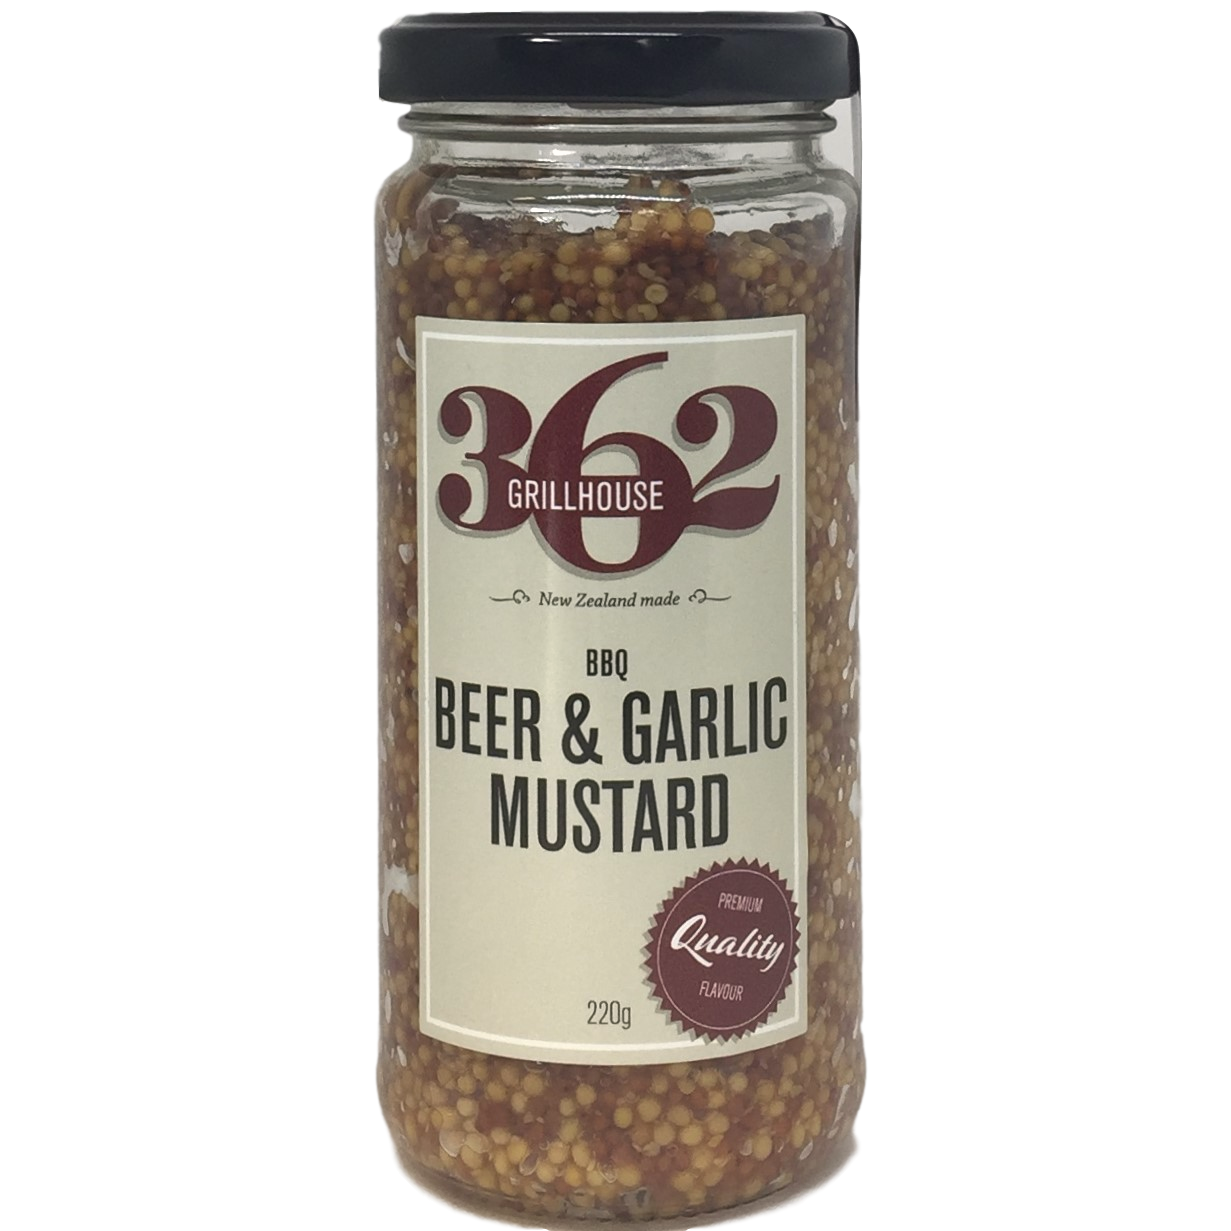 362 Grillhouse - BBQ Beer and Garlic Mustard